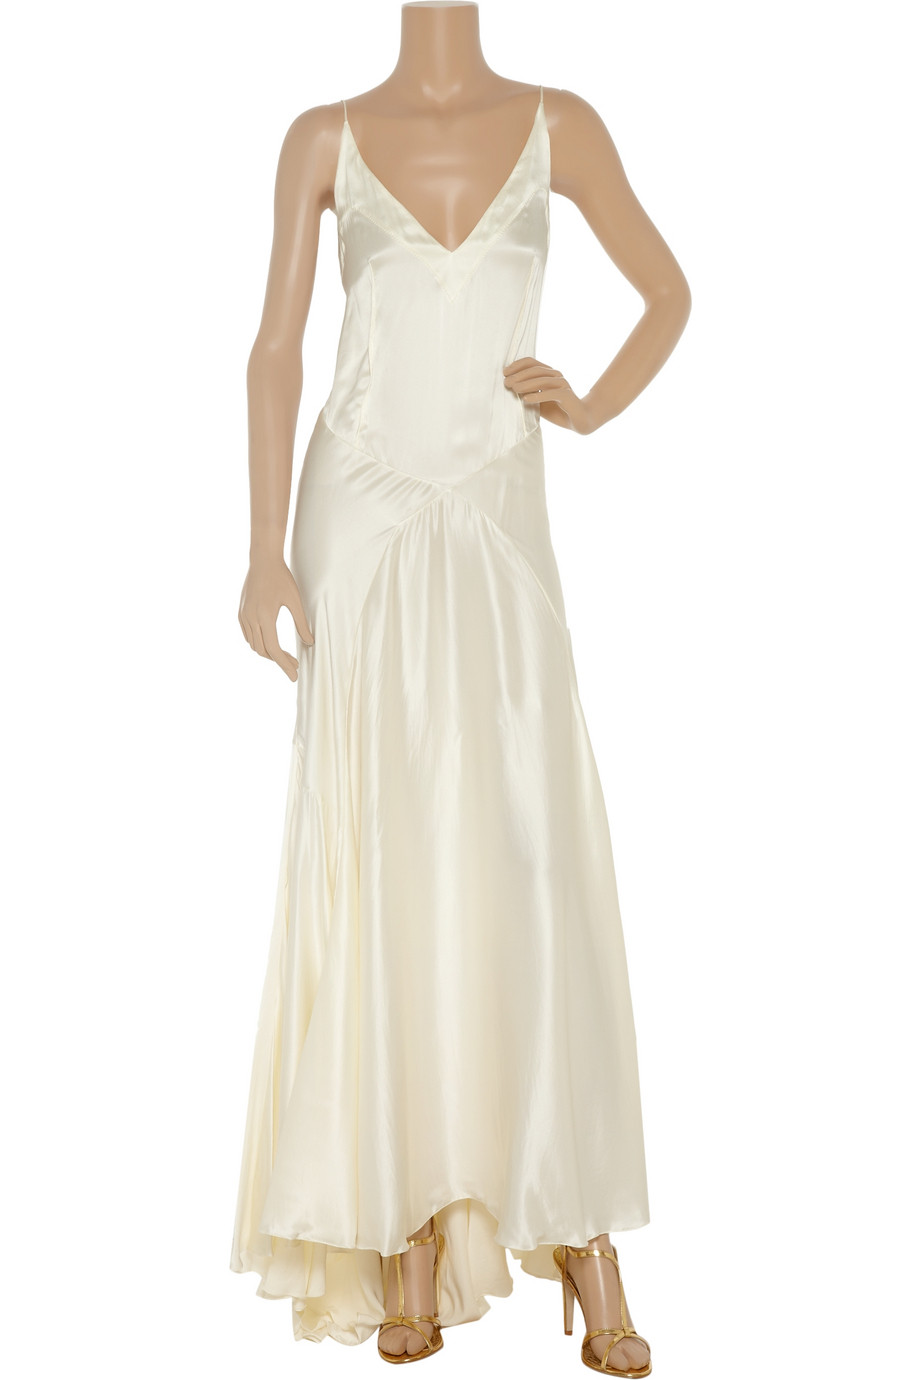 Rochas Silk Maxi Dress in White - Lyst